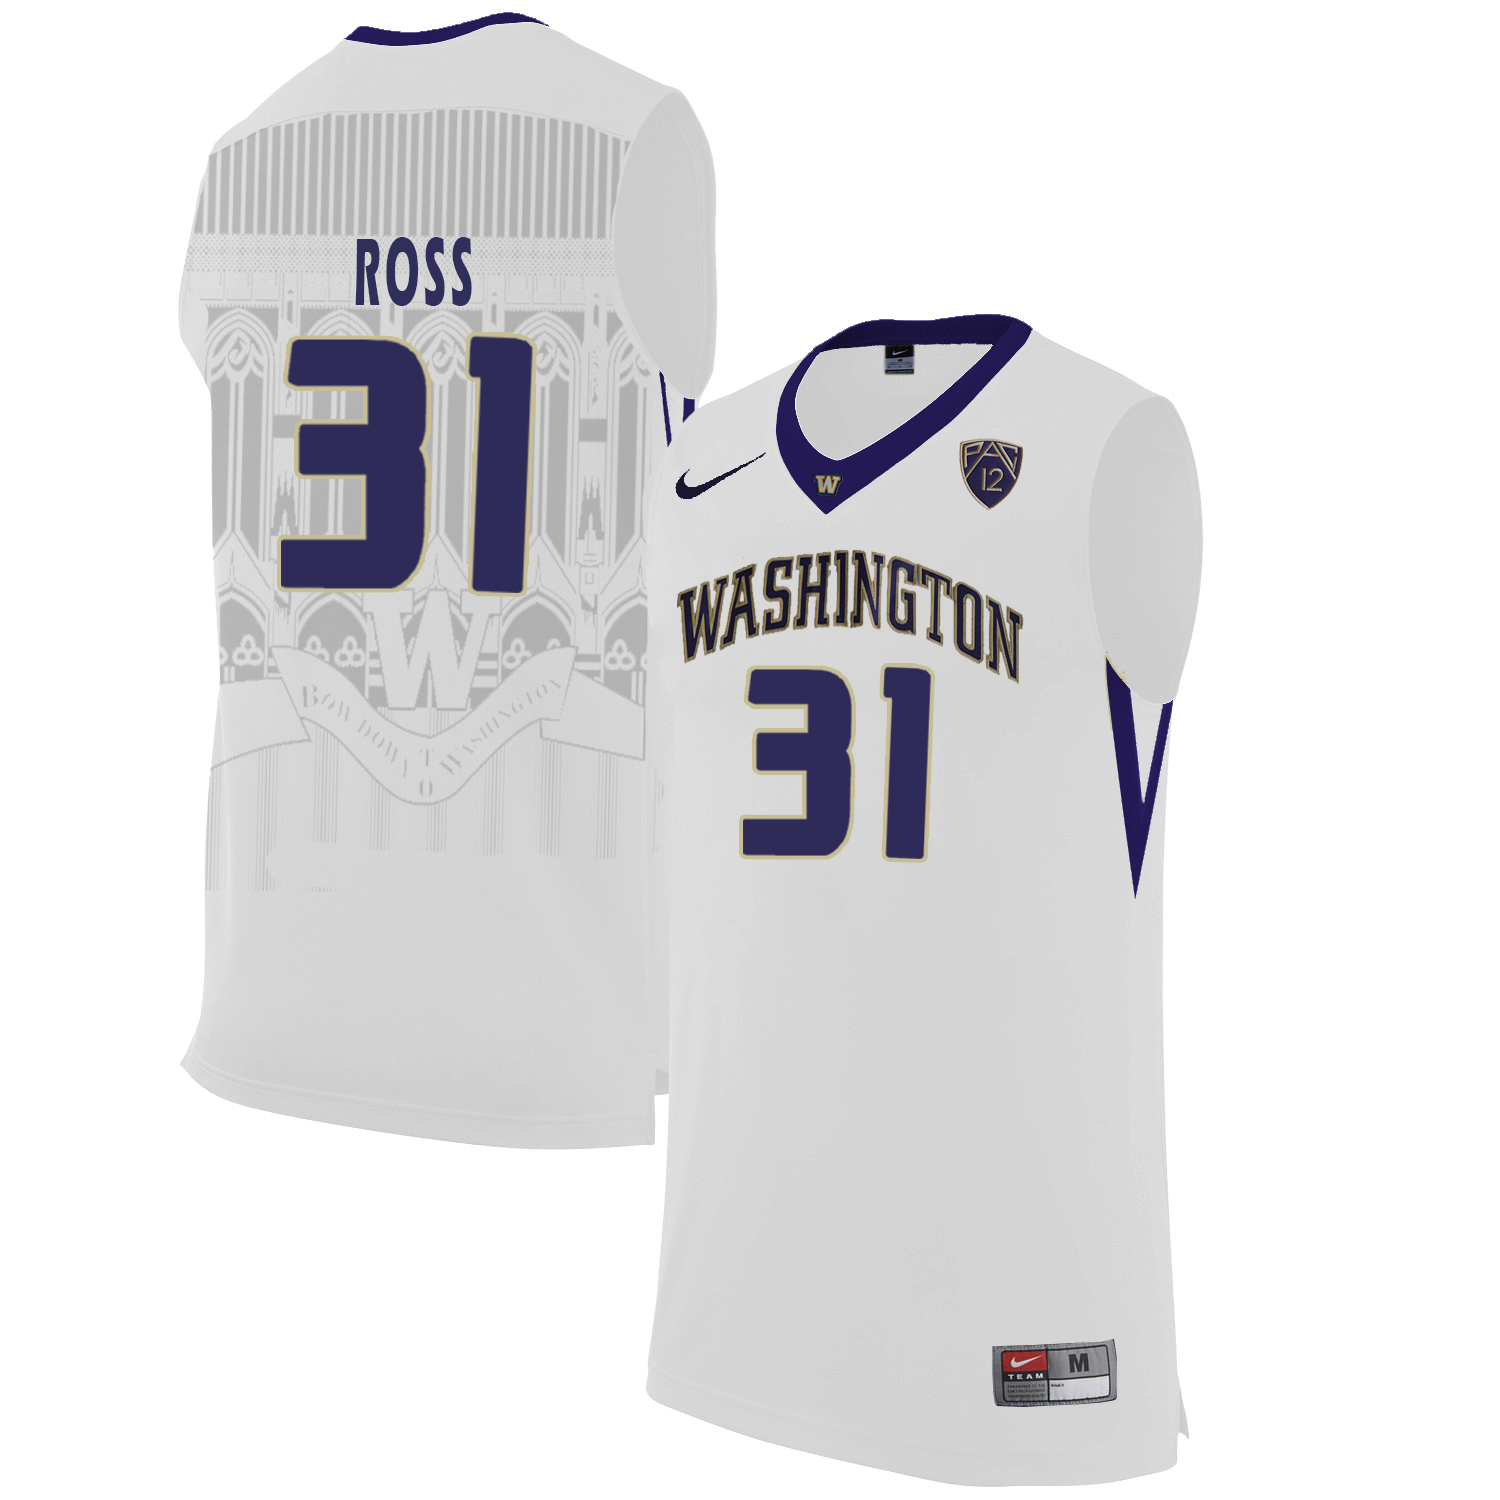 Washington Huskies 31 Terrence Ross White College Basketball Jersey